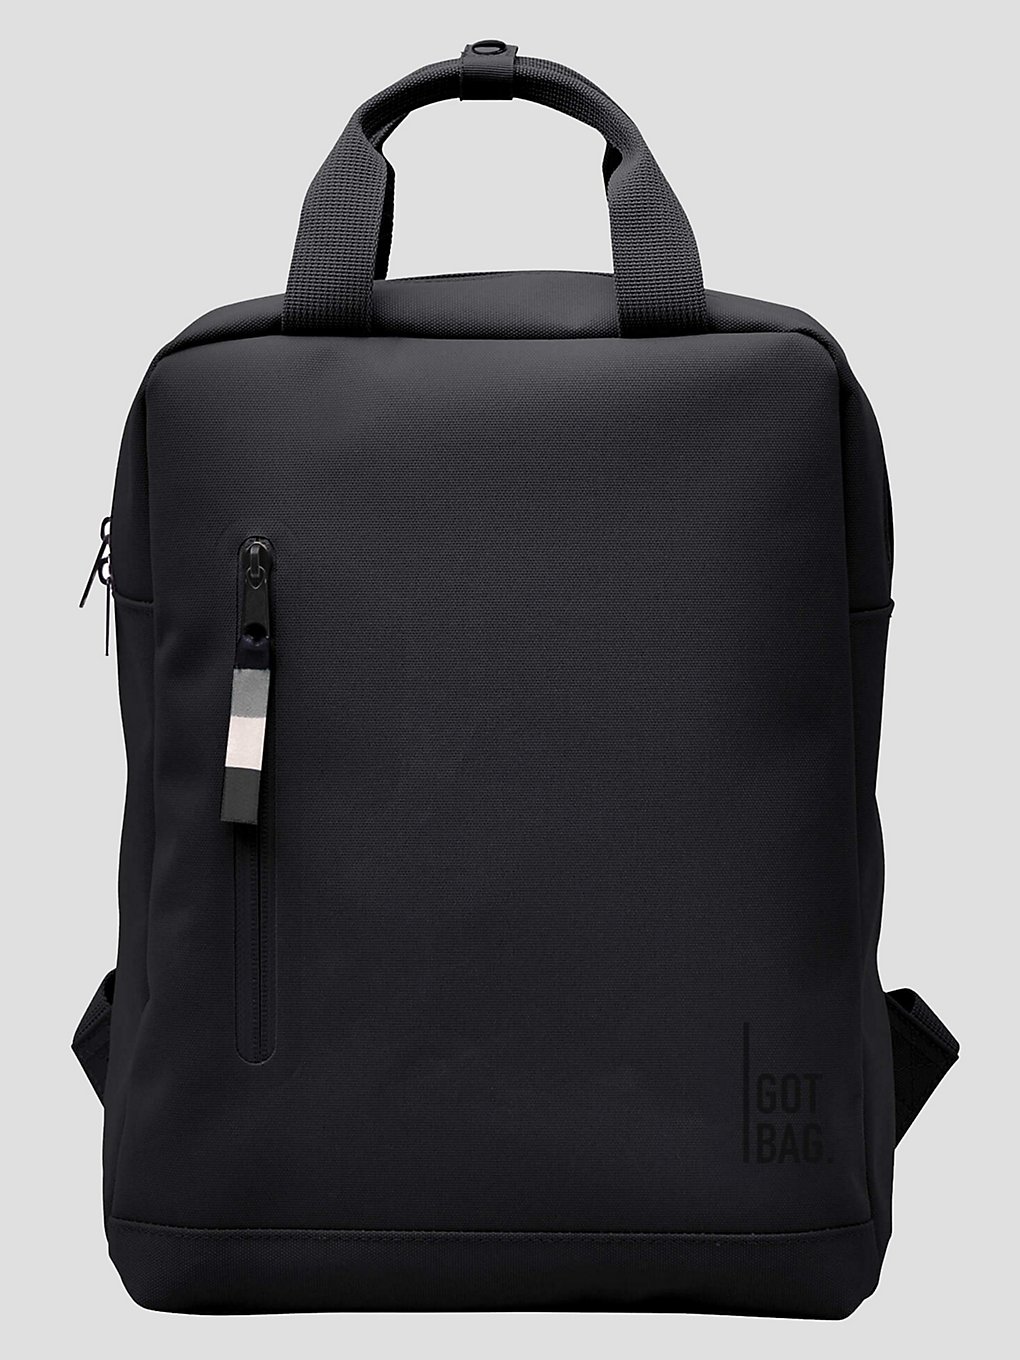 Got Bag Monochrom Backpack black kaufen